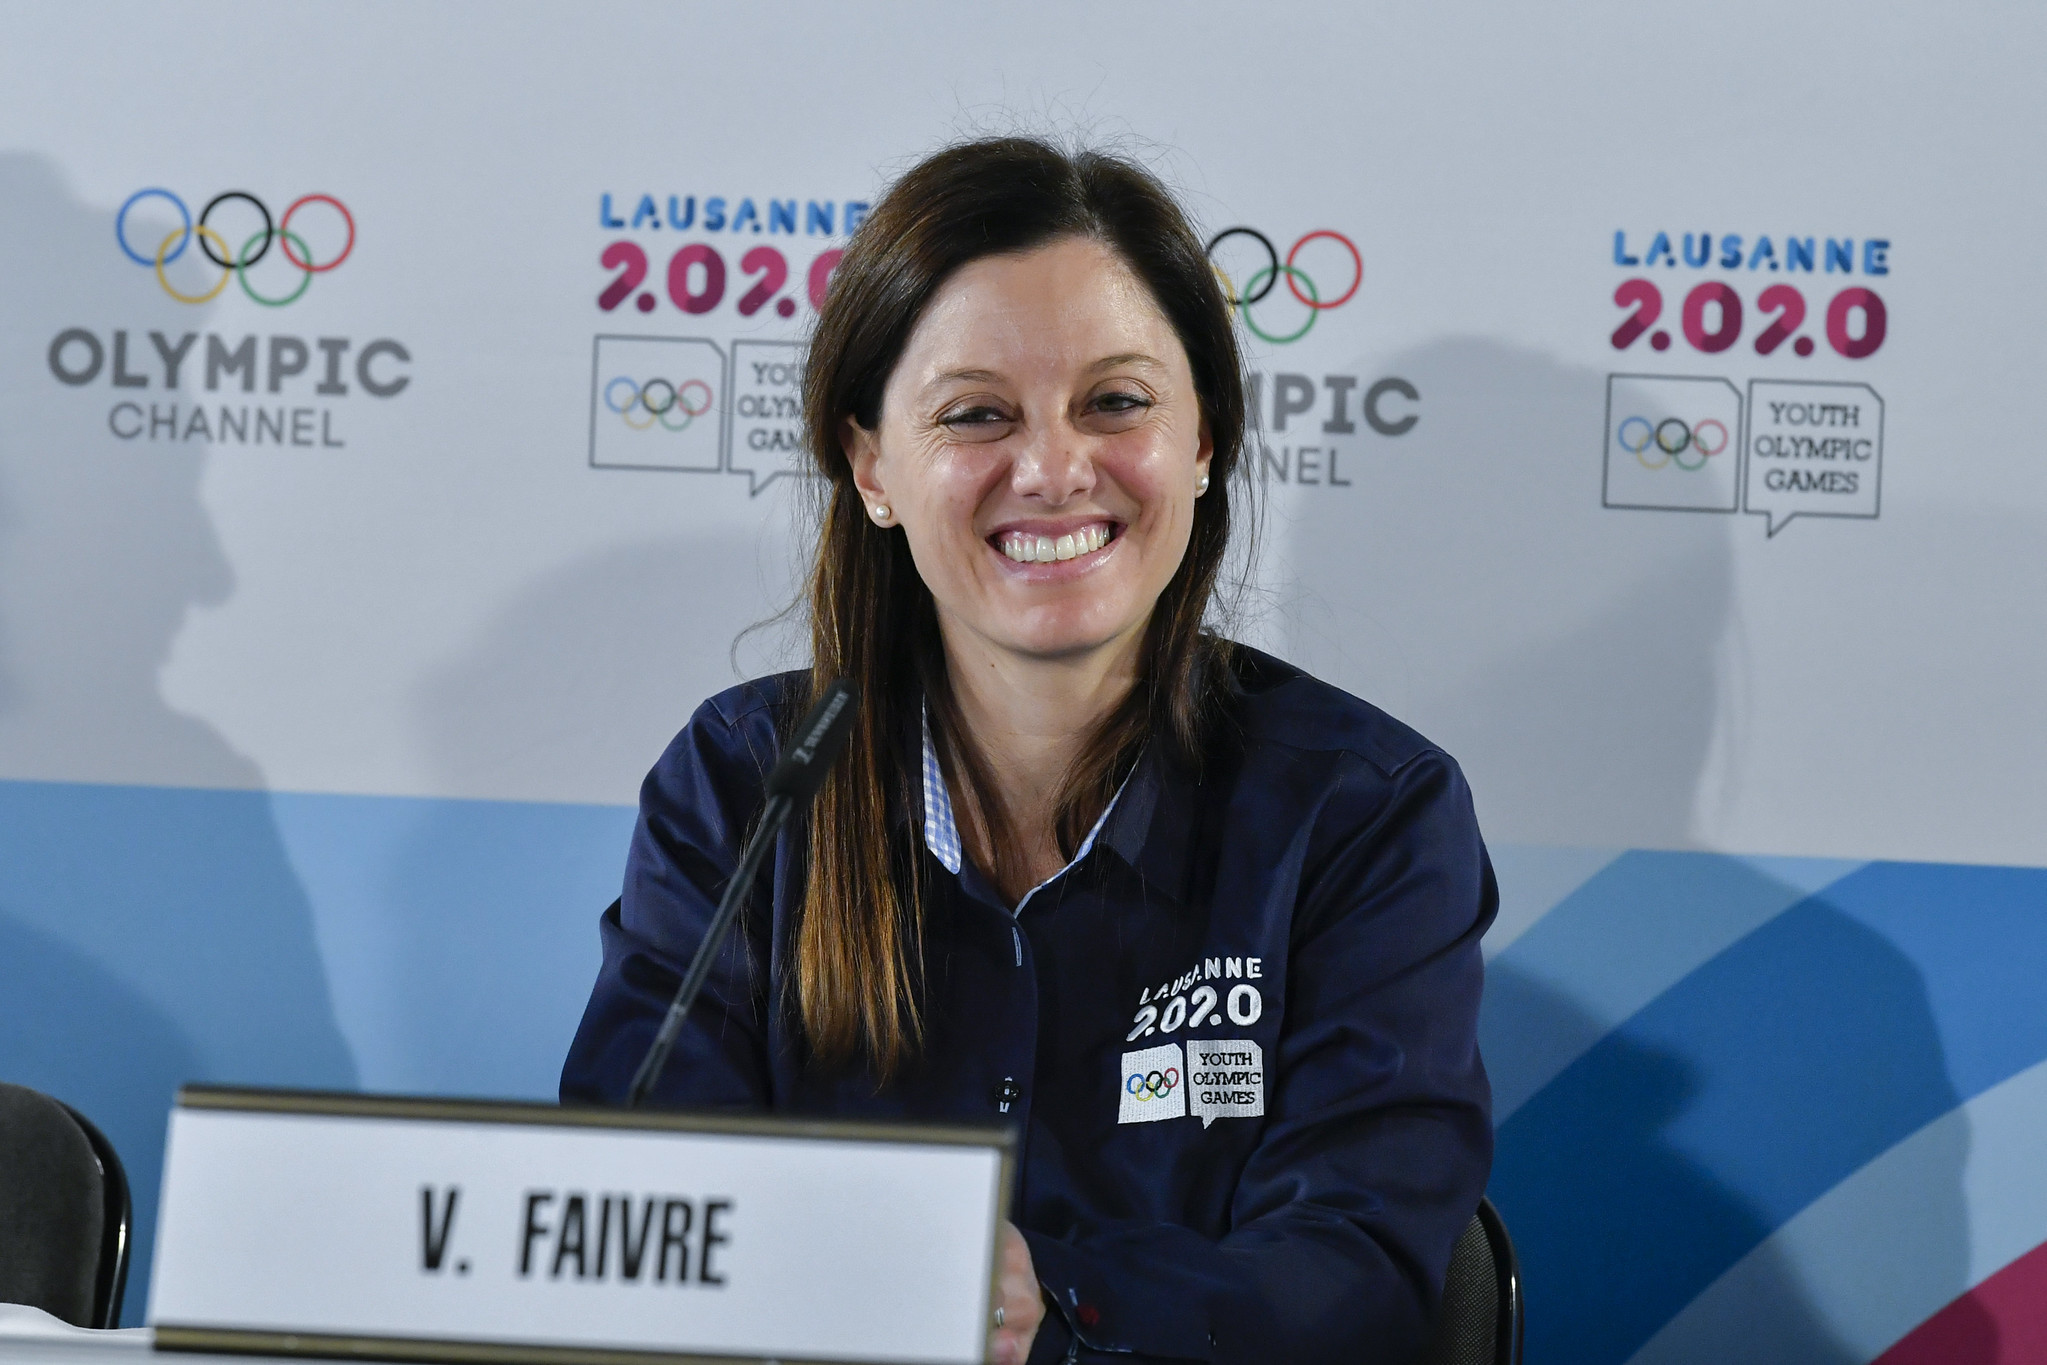 Lausanne 2020 President Virginie Faivre said 170,000 spectators had attended the Games so far ©IOC